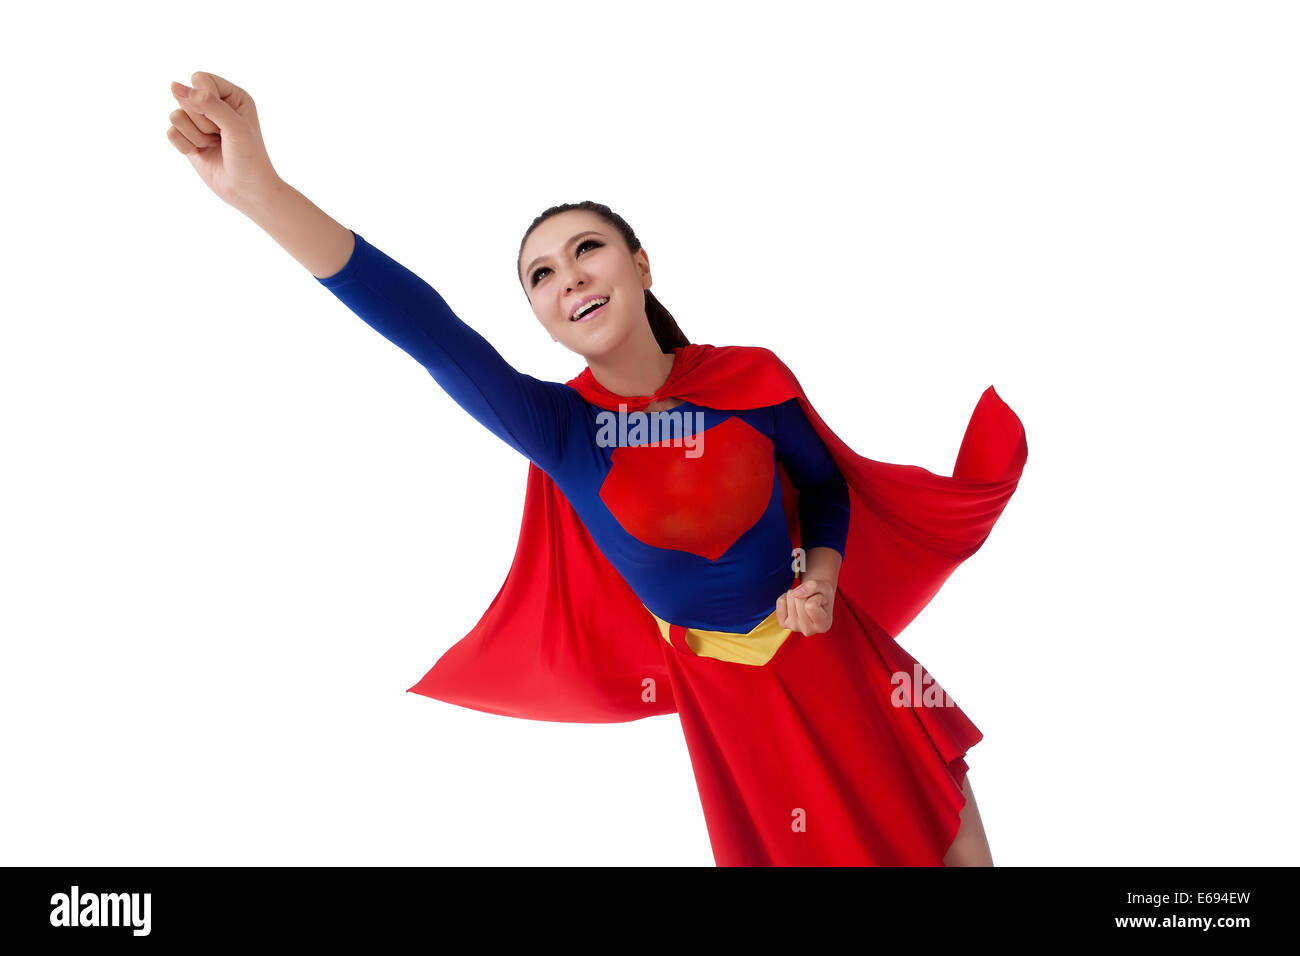 KidSuper on becoming a creative superman